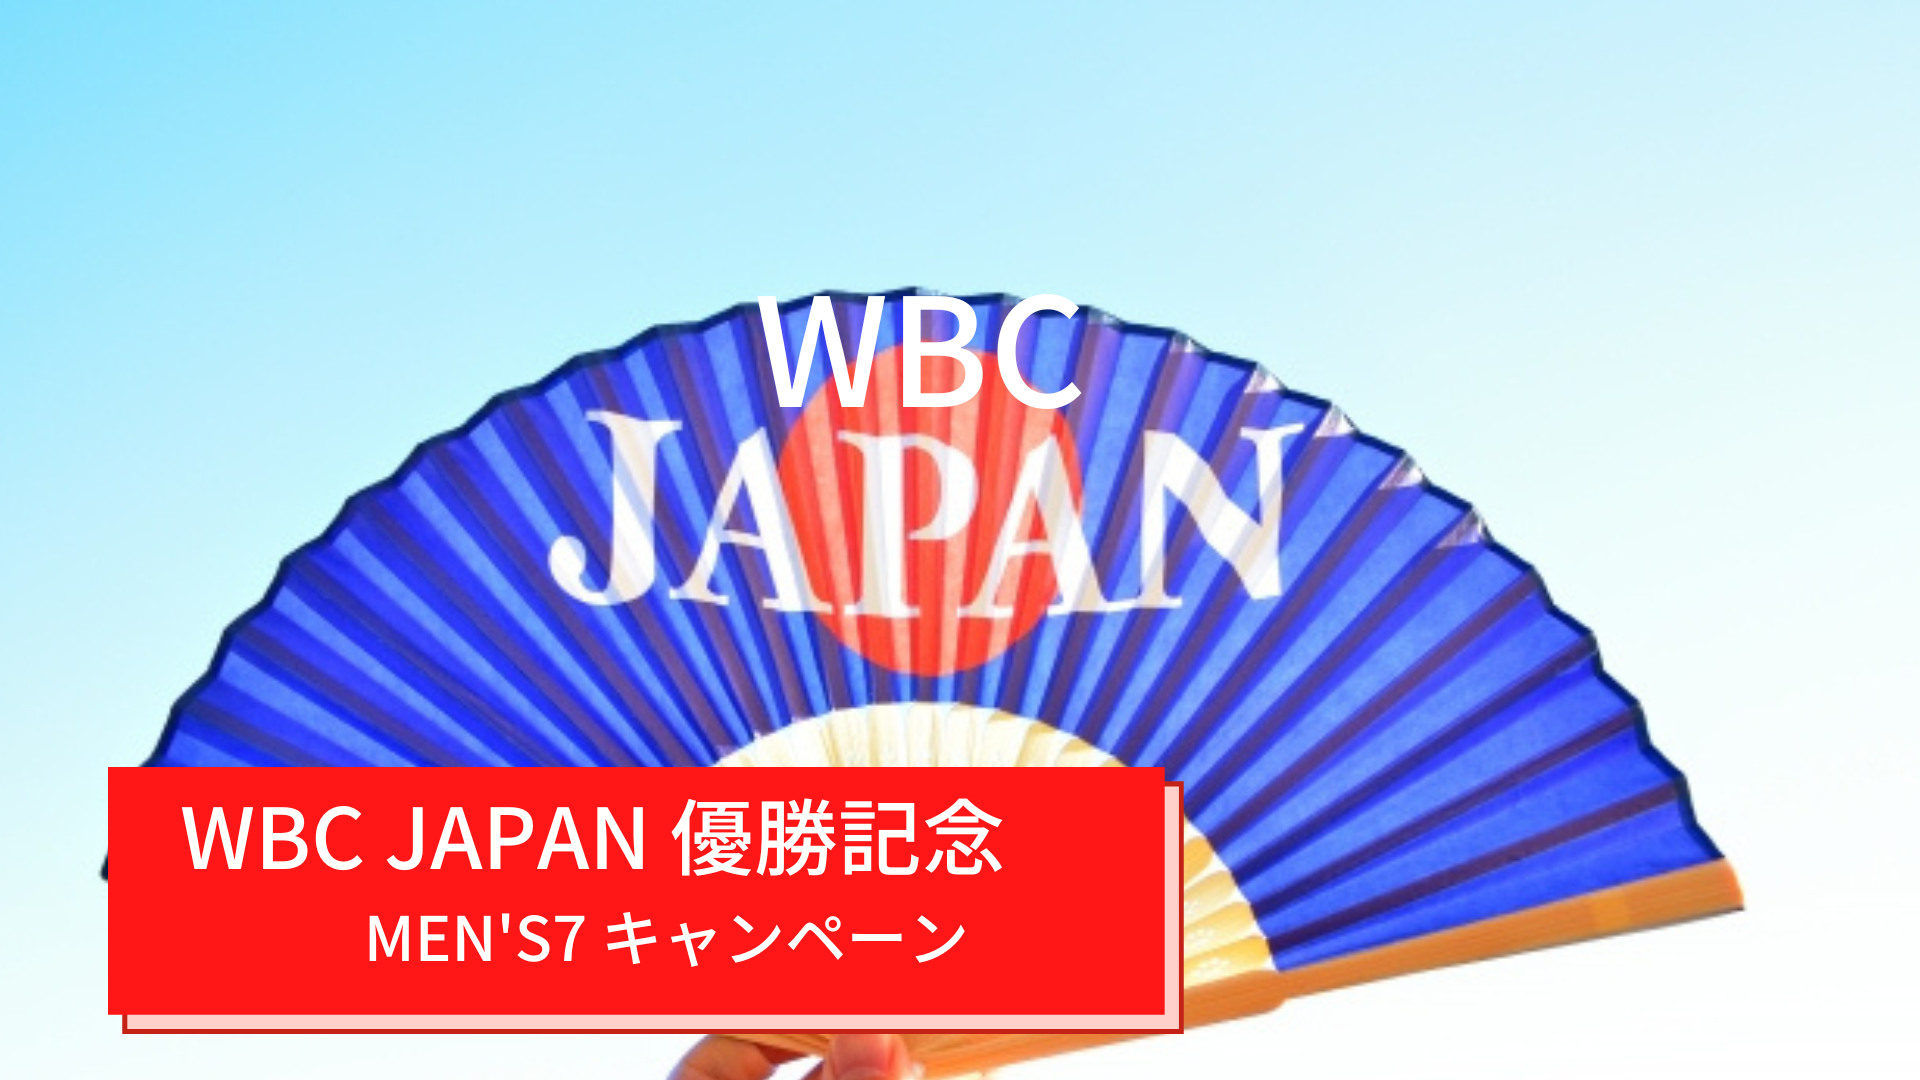 WBC JAPAN 優勝記念MEN'S7 キャンペーン